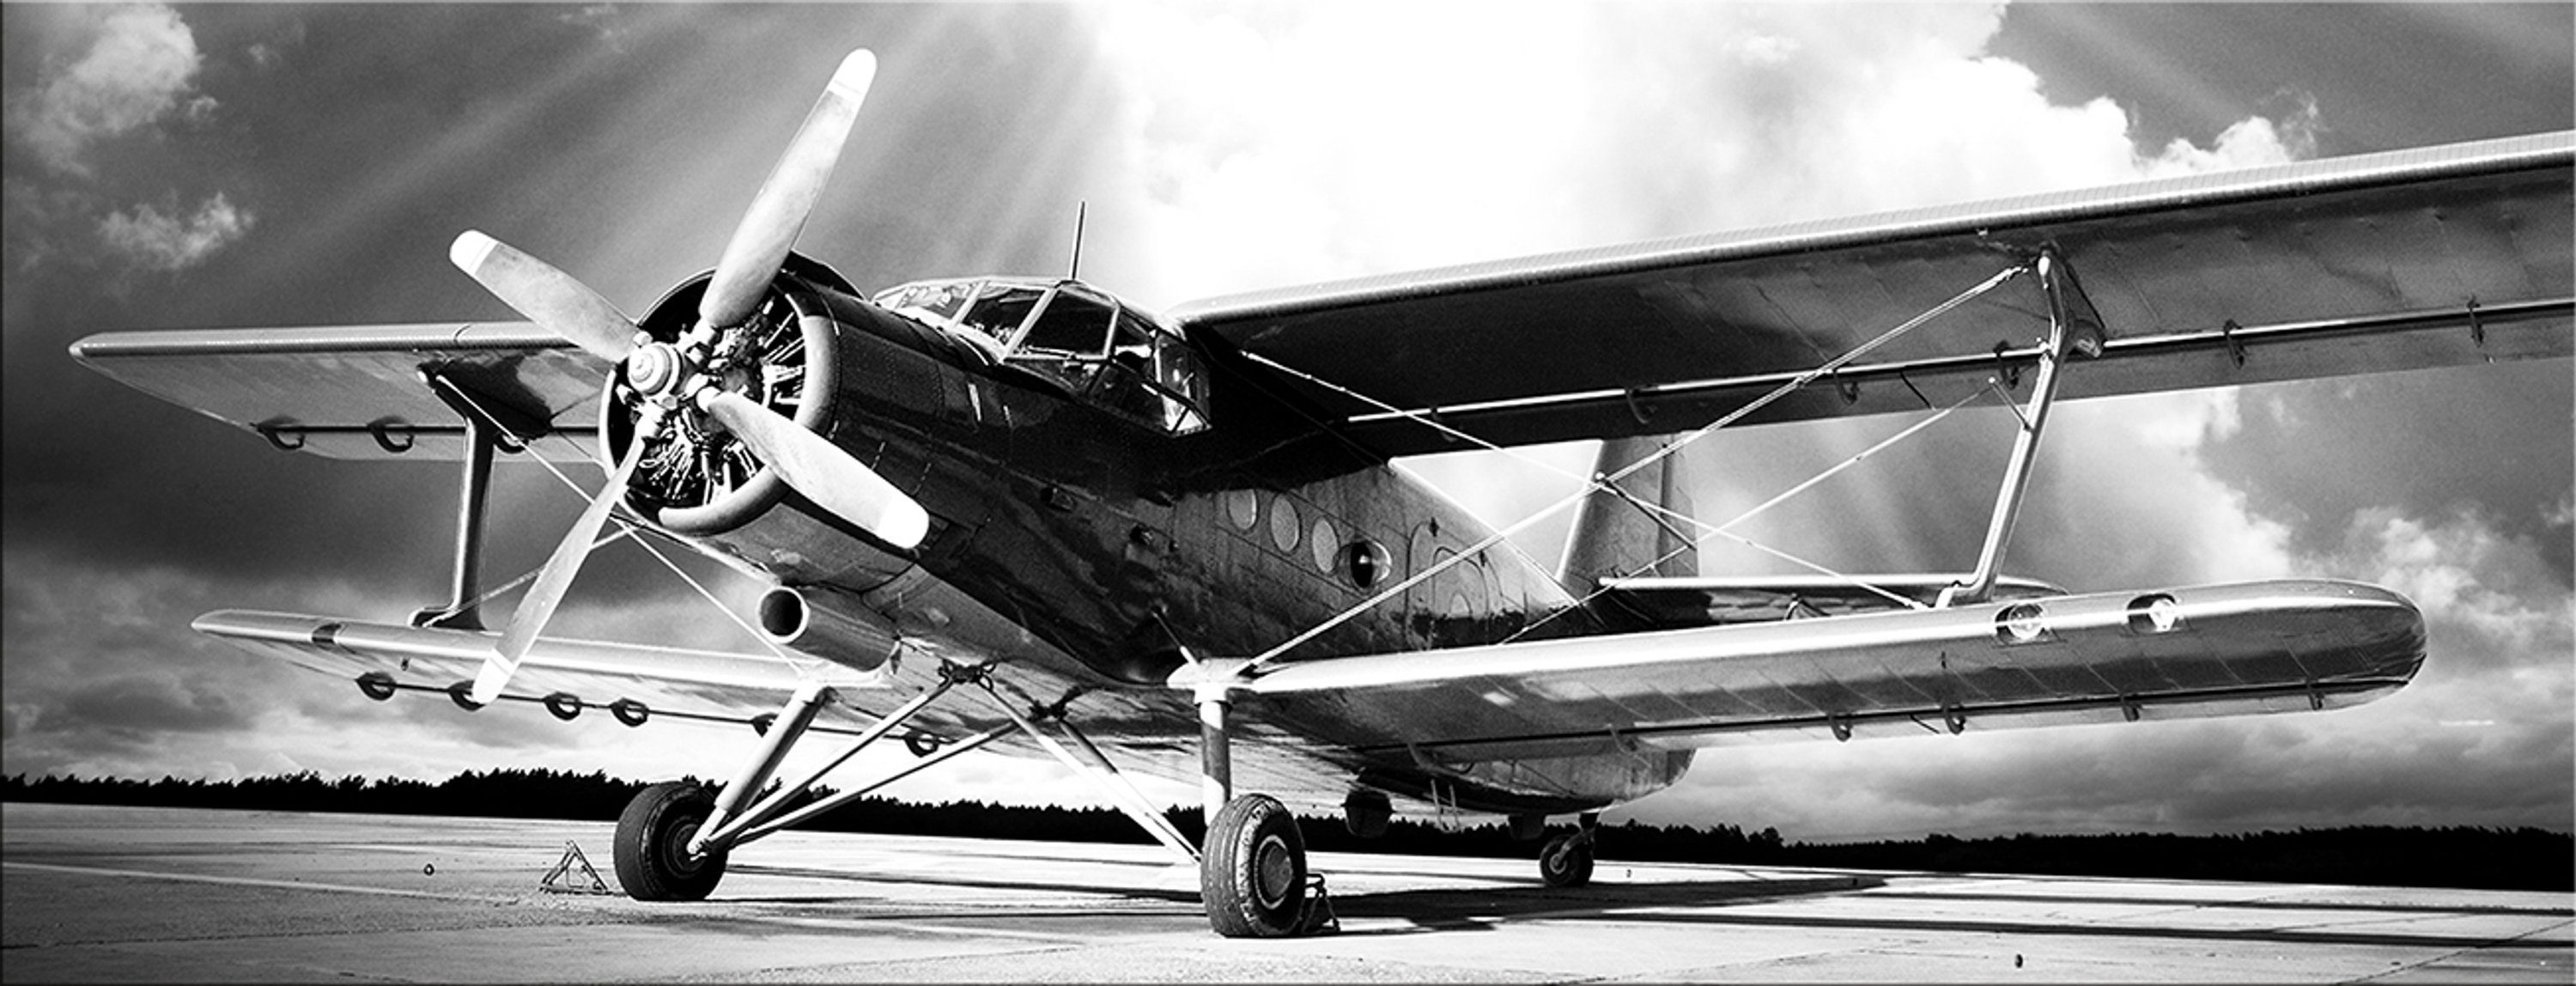 artissimo Glasbild Glasbild 80x30cm Bild aus Glas schwarz-weiß Foto vintage Flugzeug, Fotografie: Retro Flugzeug